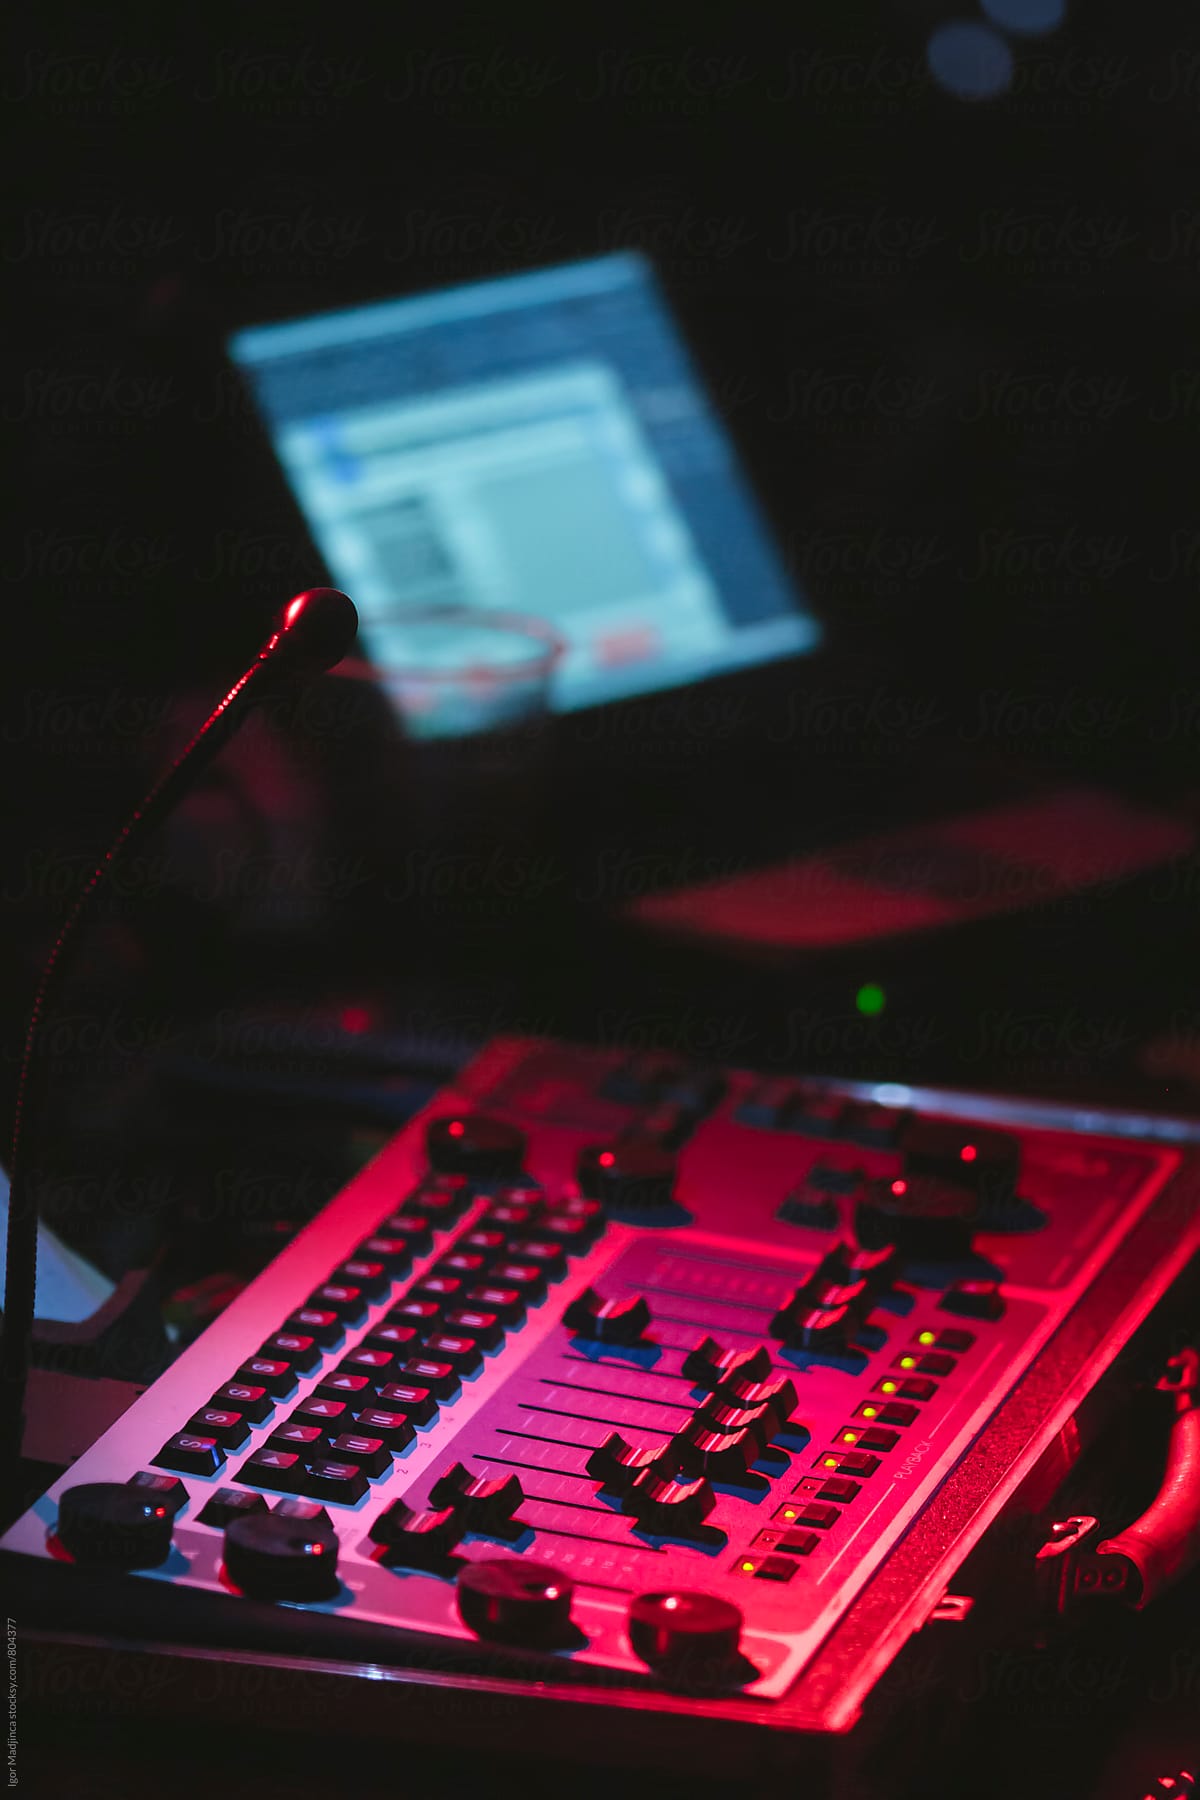 dj, computer,red lights,working on a sound mixer